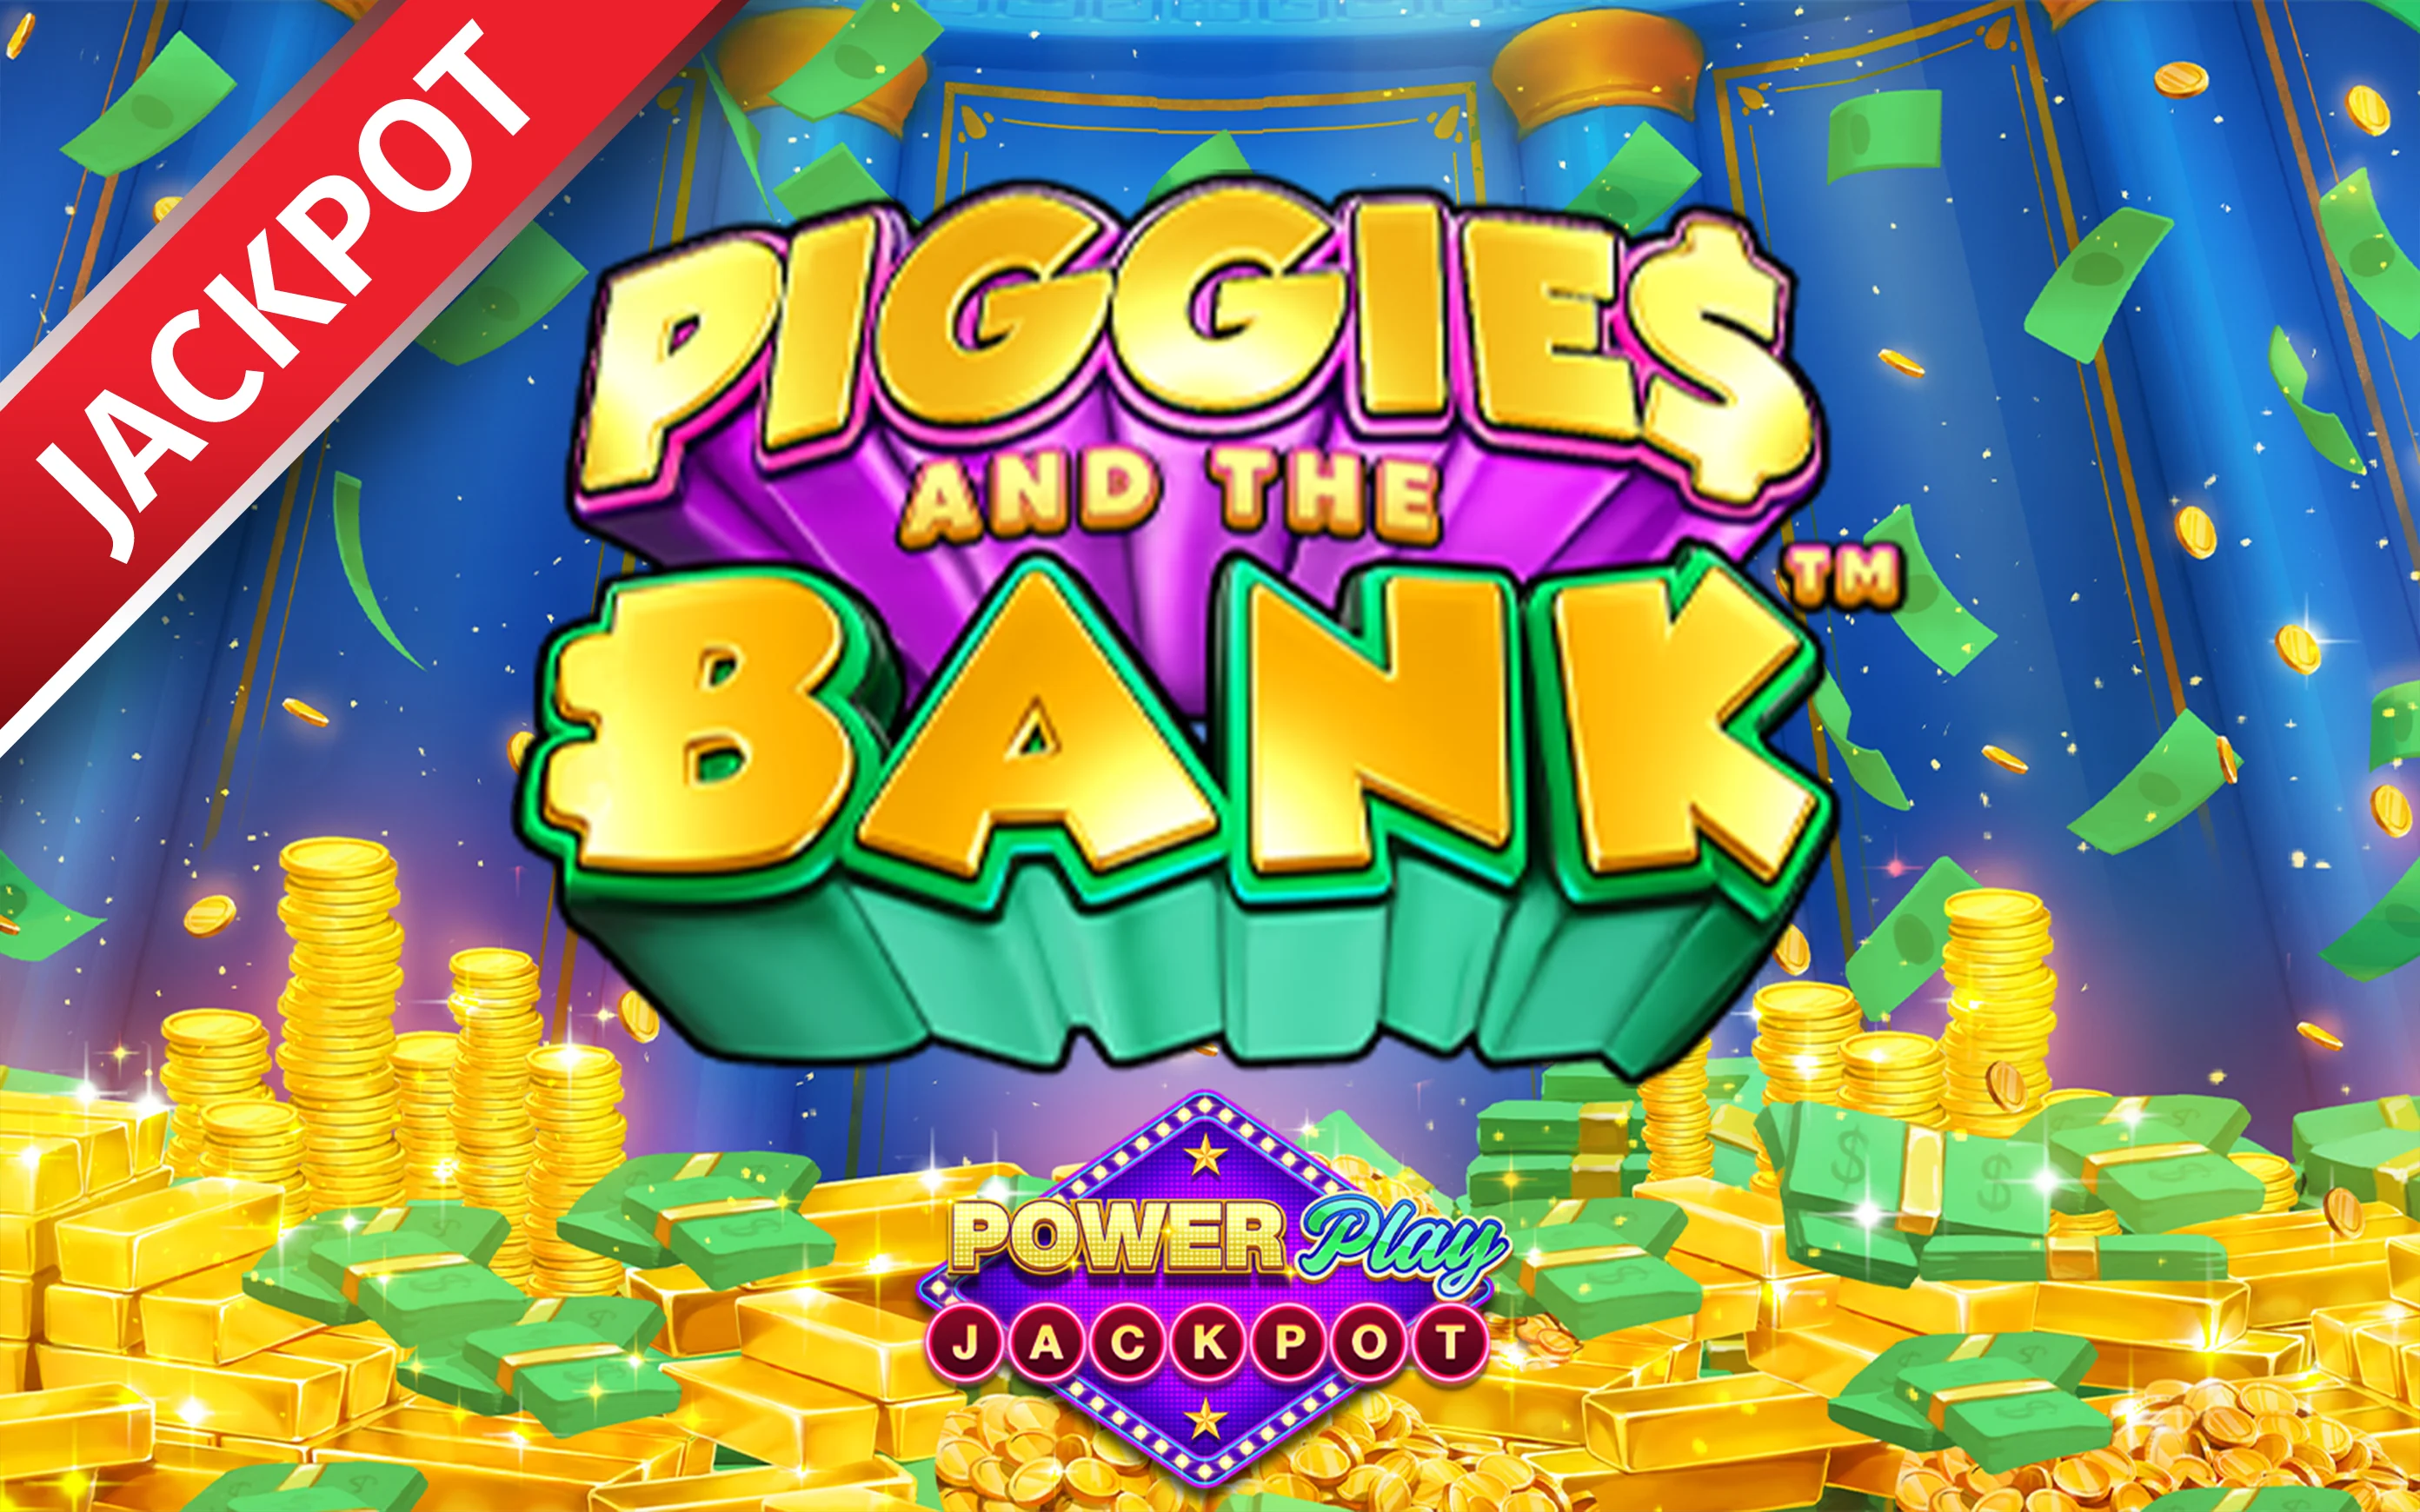 Play Mega Fire Blaze: Piggies and the Bank™ PowerPlay Jackpot on Starcasino.be online casino